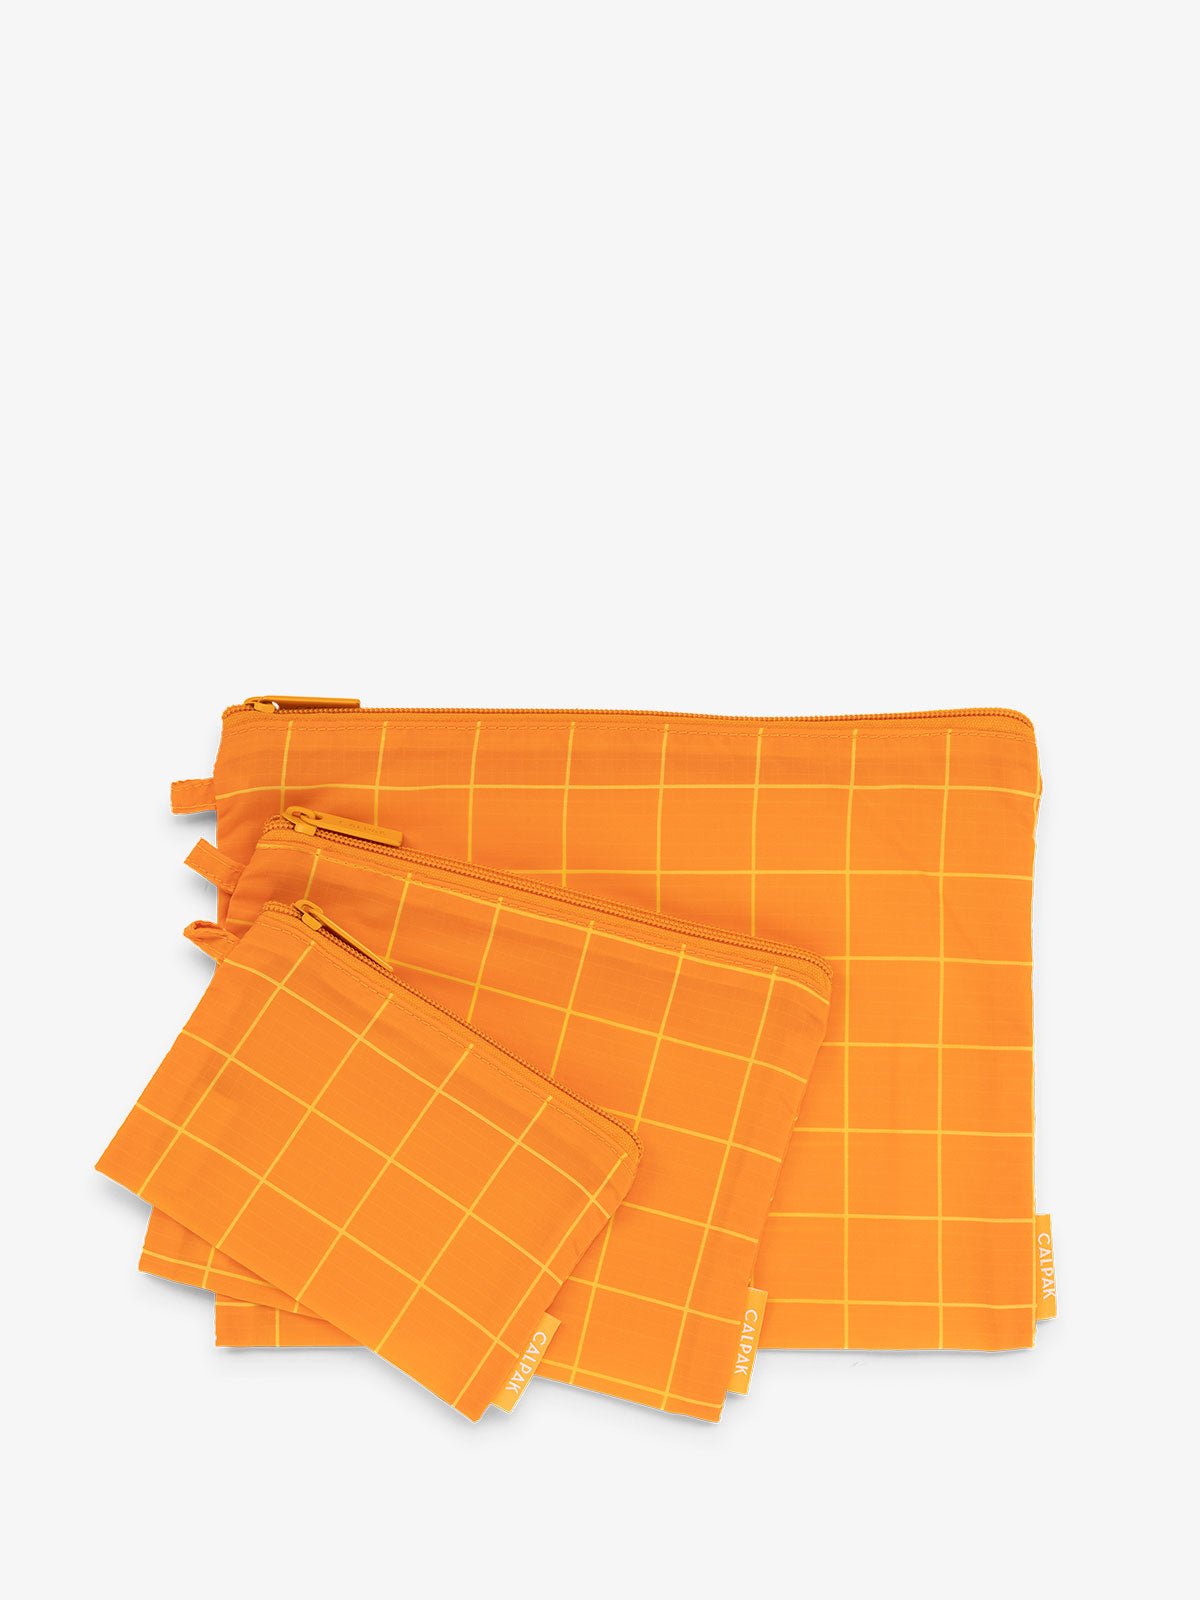 CALPAK Compakt zippered pouches in orange grid